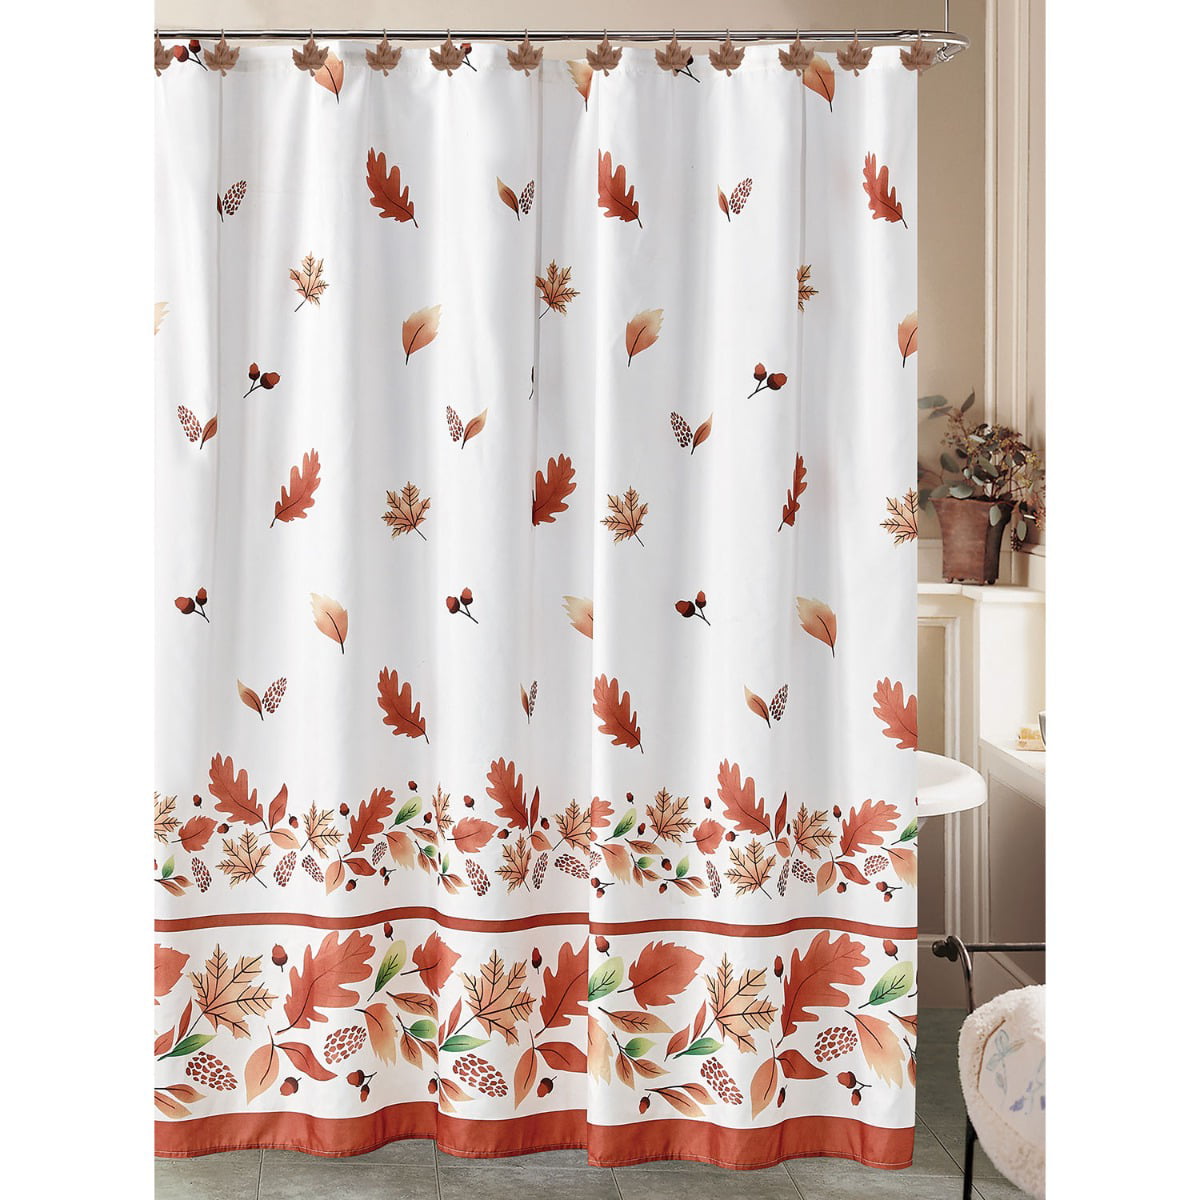 Fall Maple Leaves Cardinal Red Bird Waterproof Fabric Shower Curtain Bath Decor 